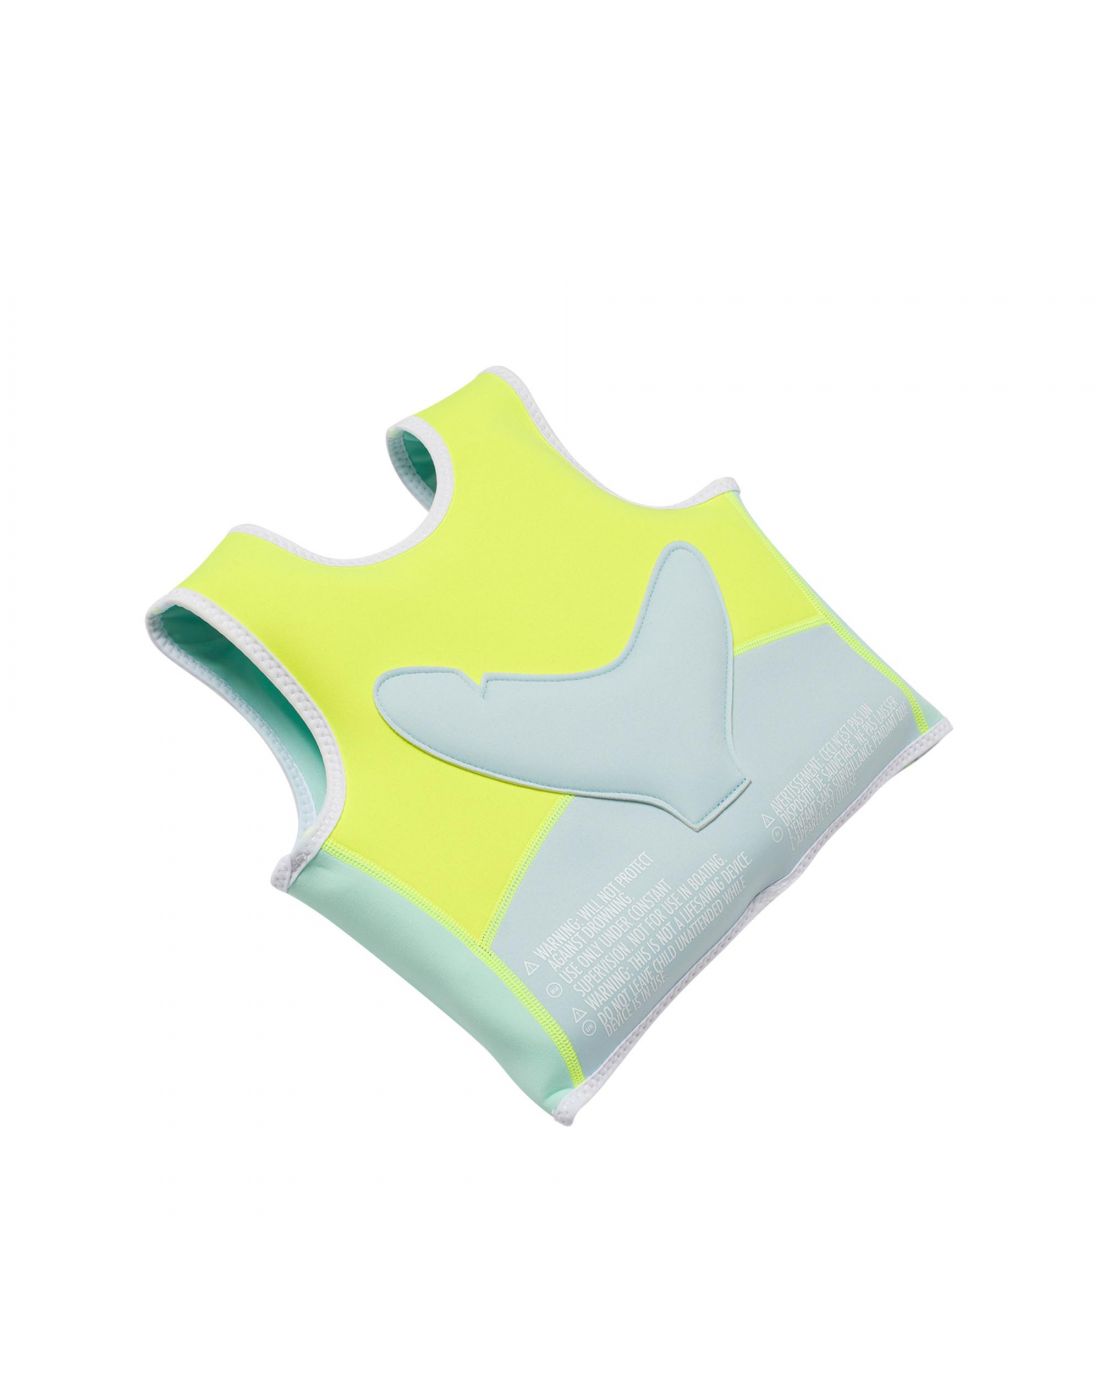 SunnyLife Salty the Shark Swim Vest 1-2 Aqua Neon Yellow